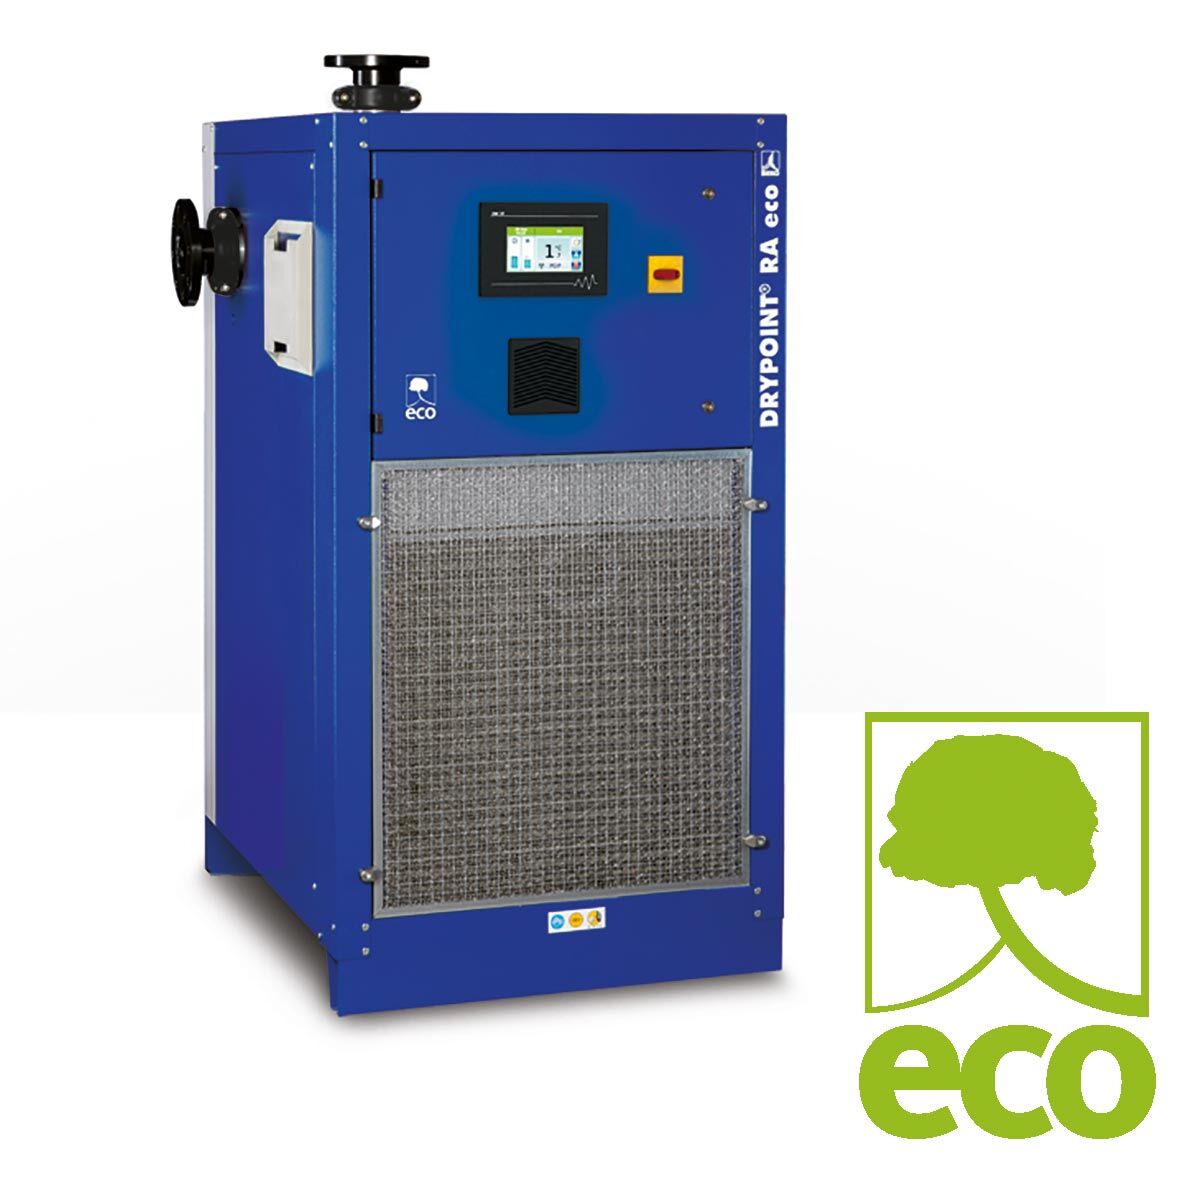 BEKO DRYPOINT® RA 4400 / AC con essiccatore frigorifero ad aria compressa Bekomat eco raffreddato ad aria